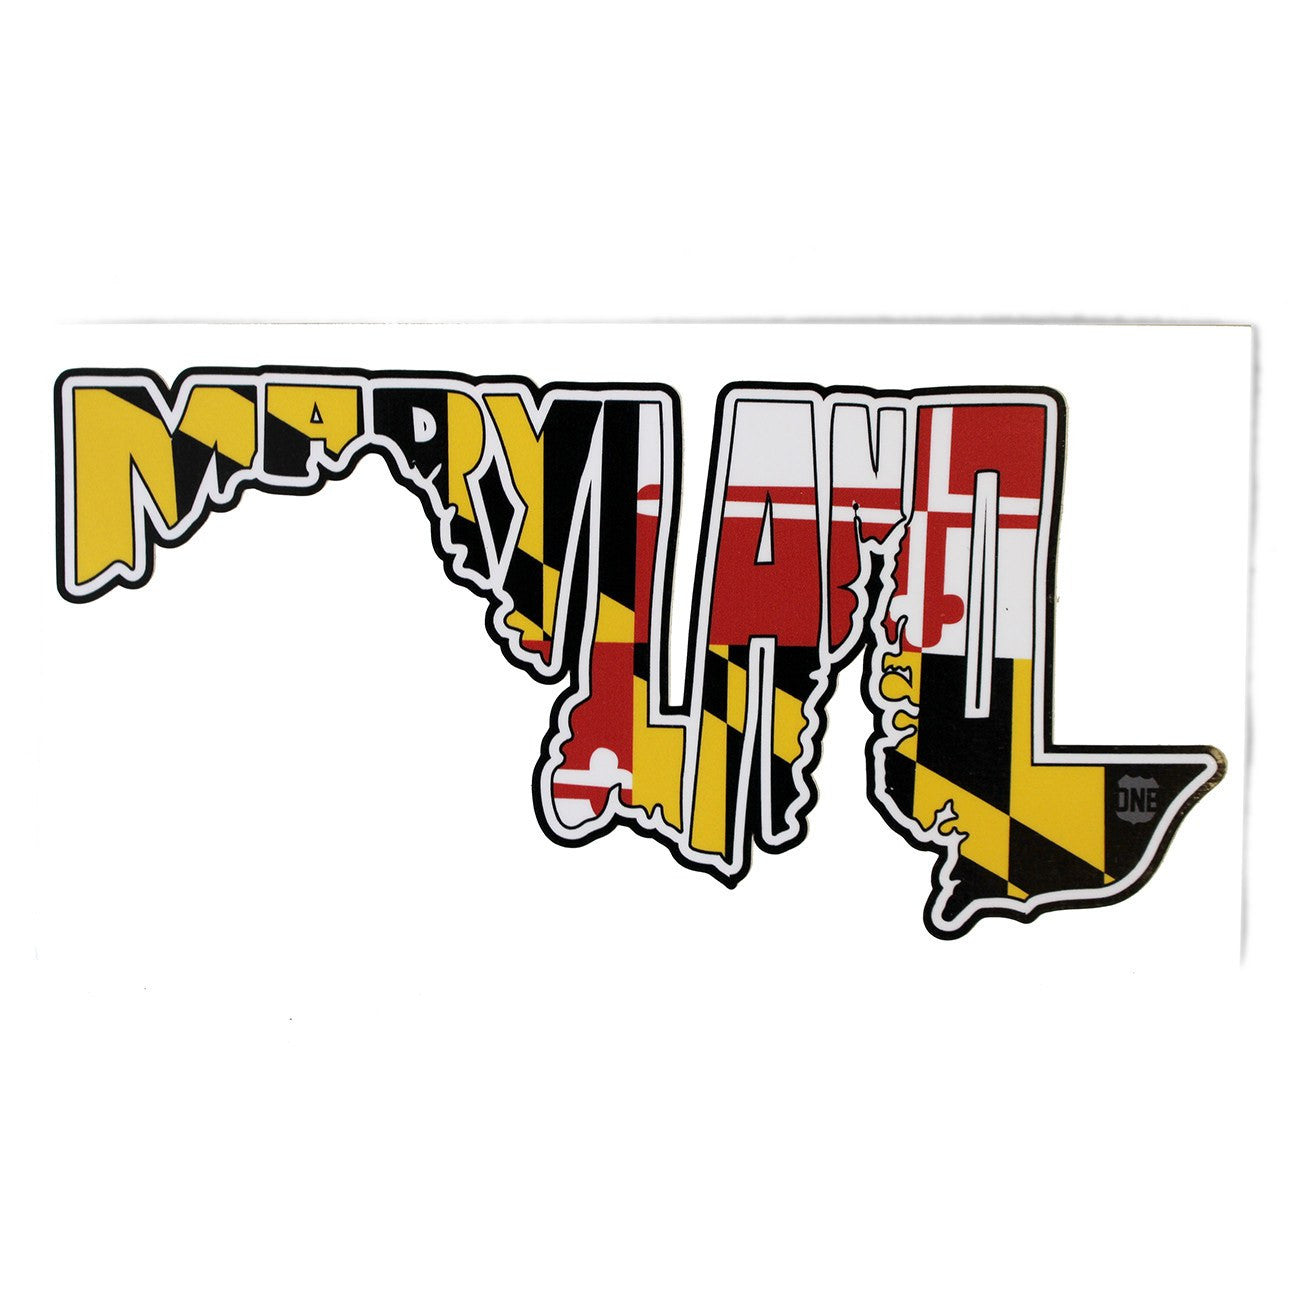 Maryland in Maryland in Maryland / Sticker - Route One Apparel